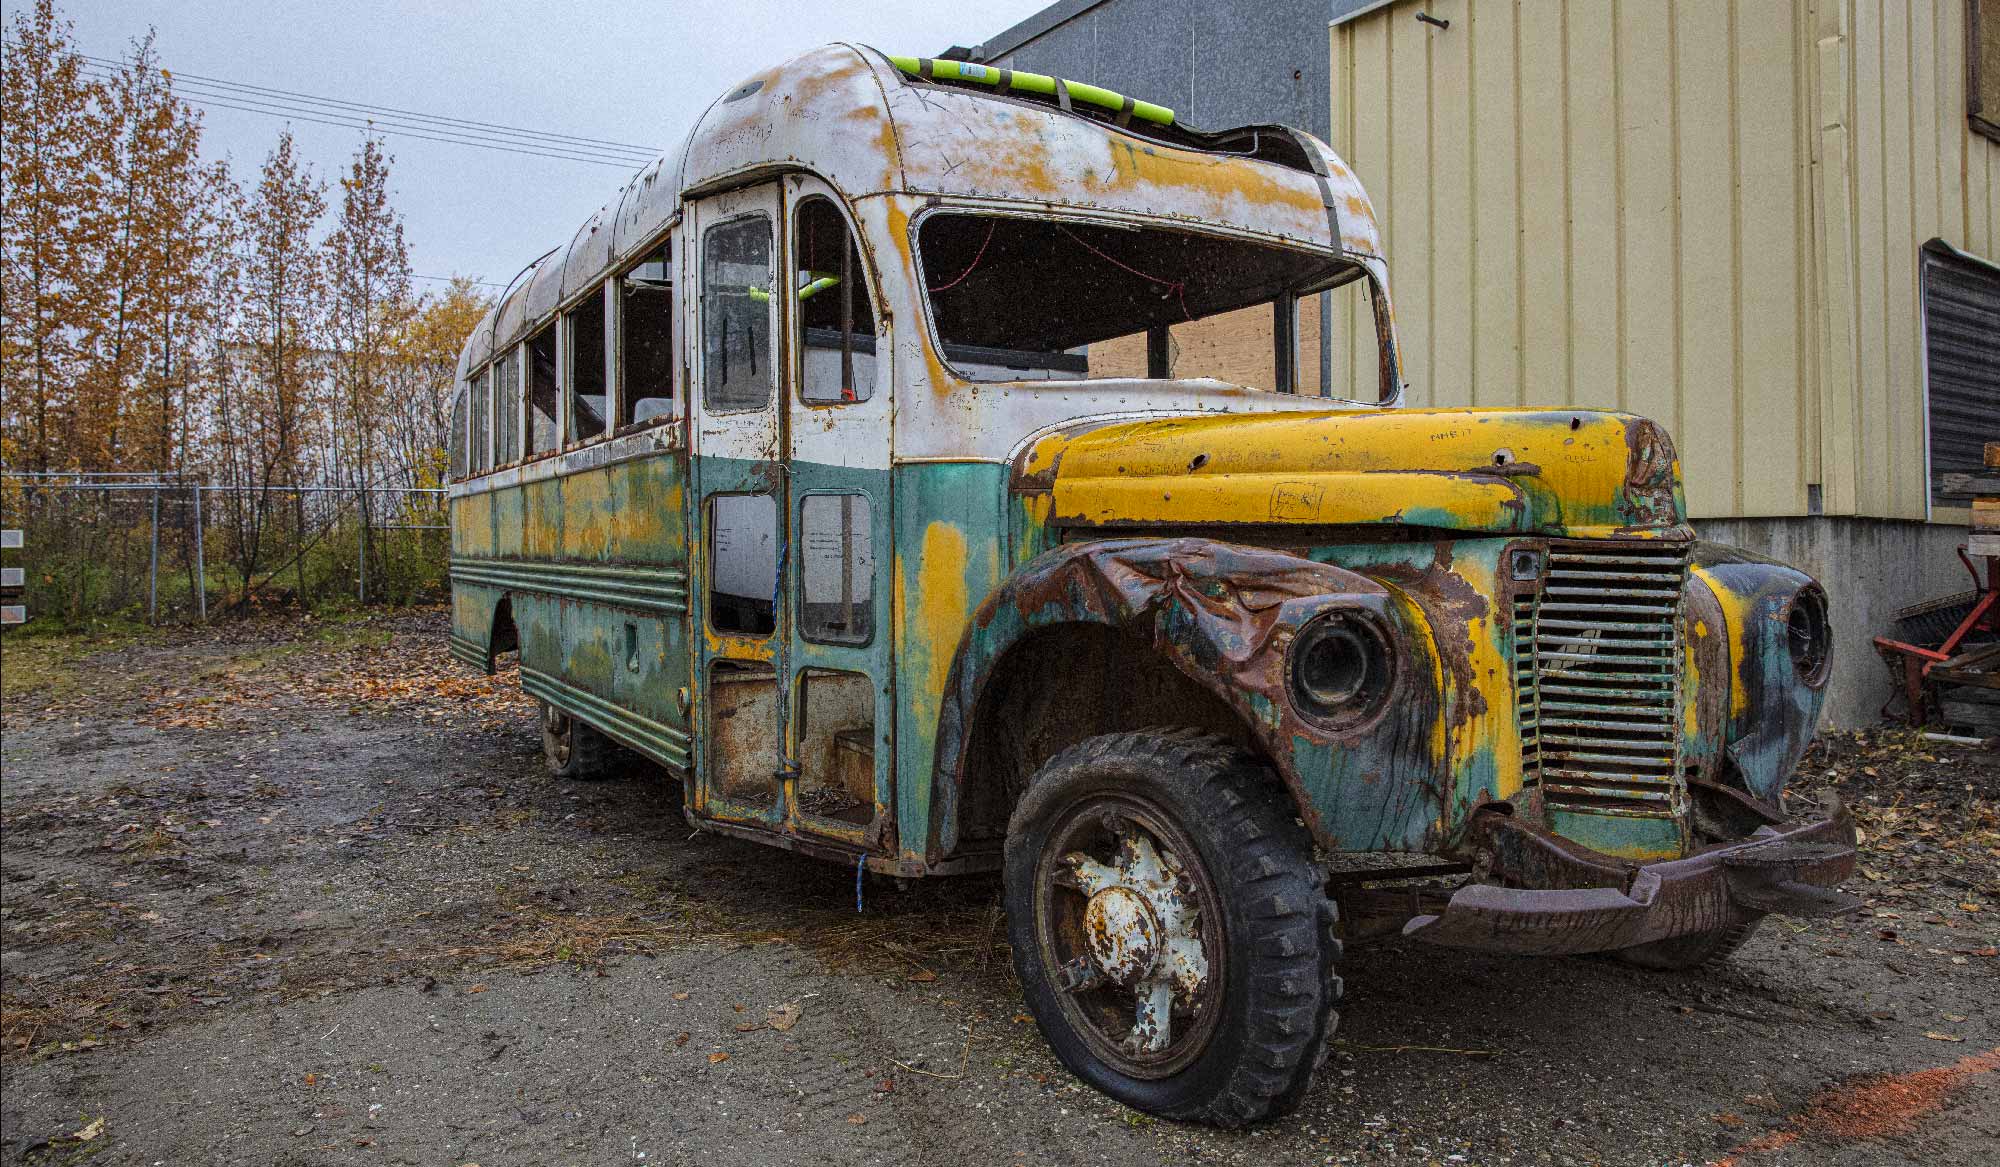 Magic Bus: Into the wild